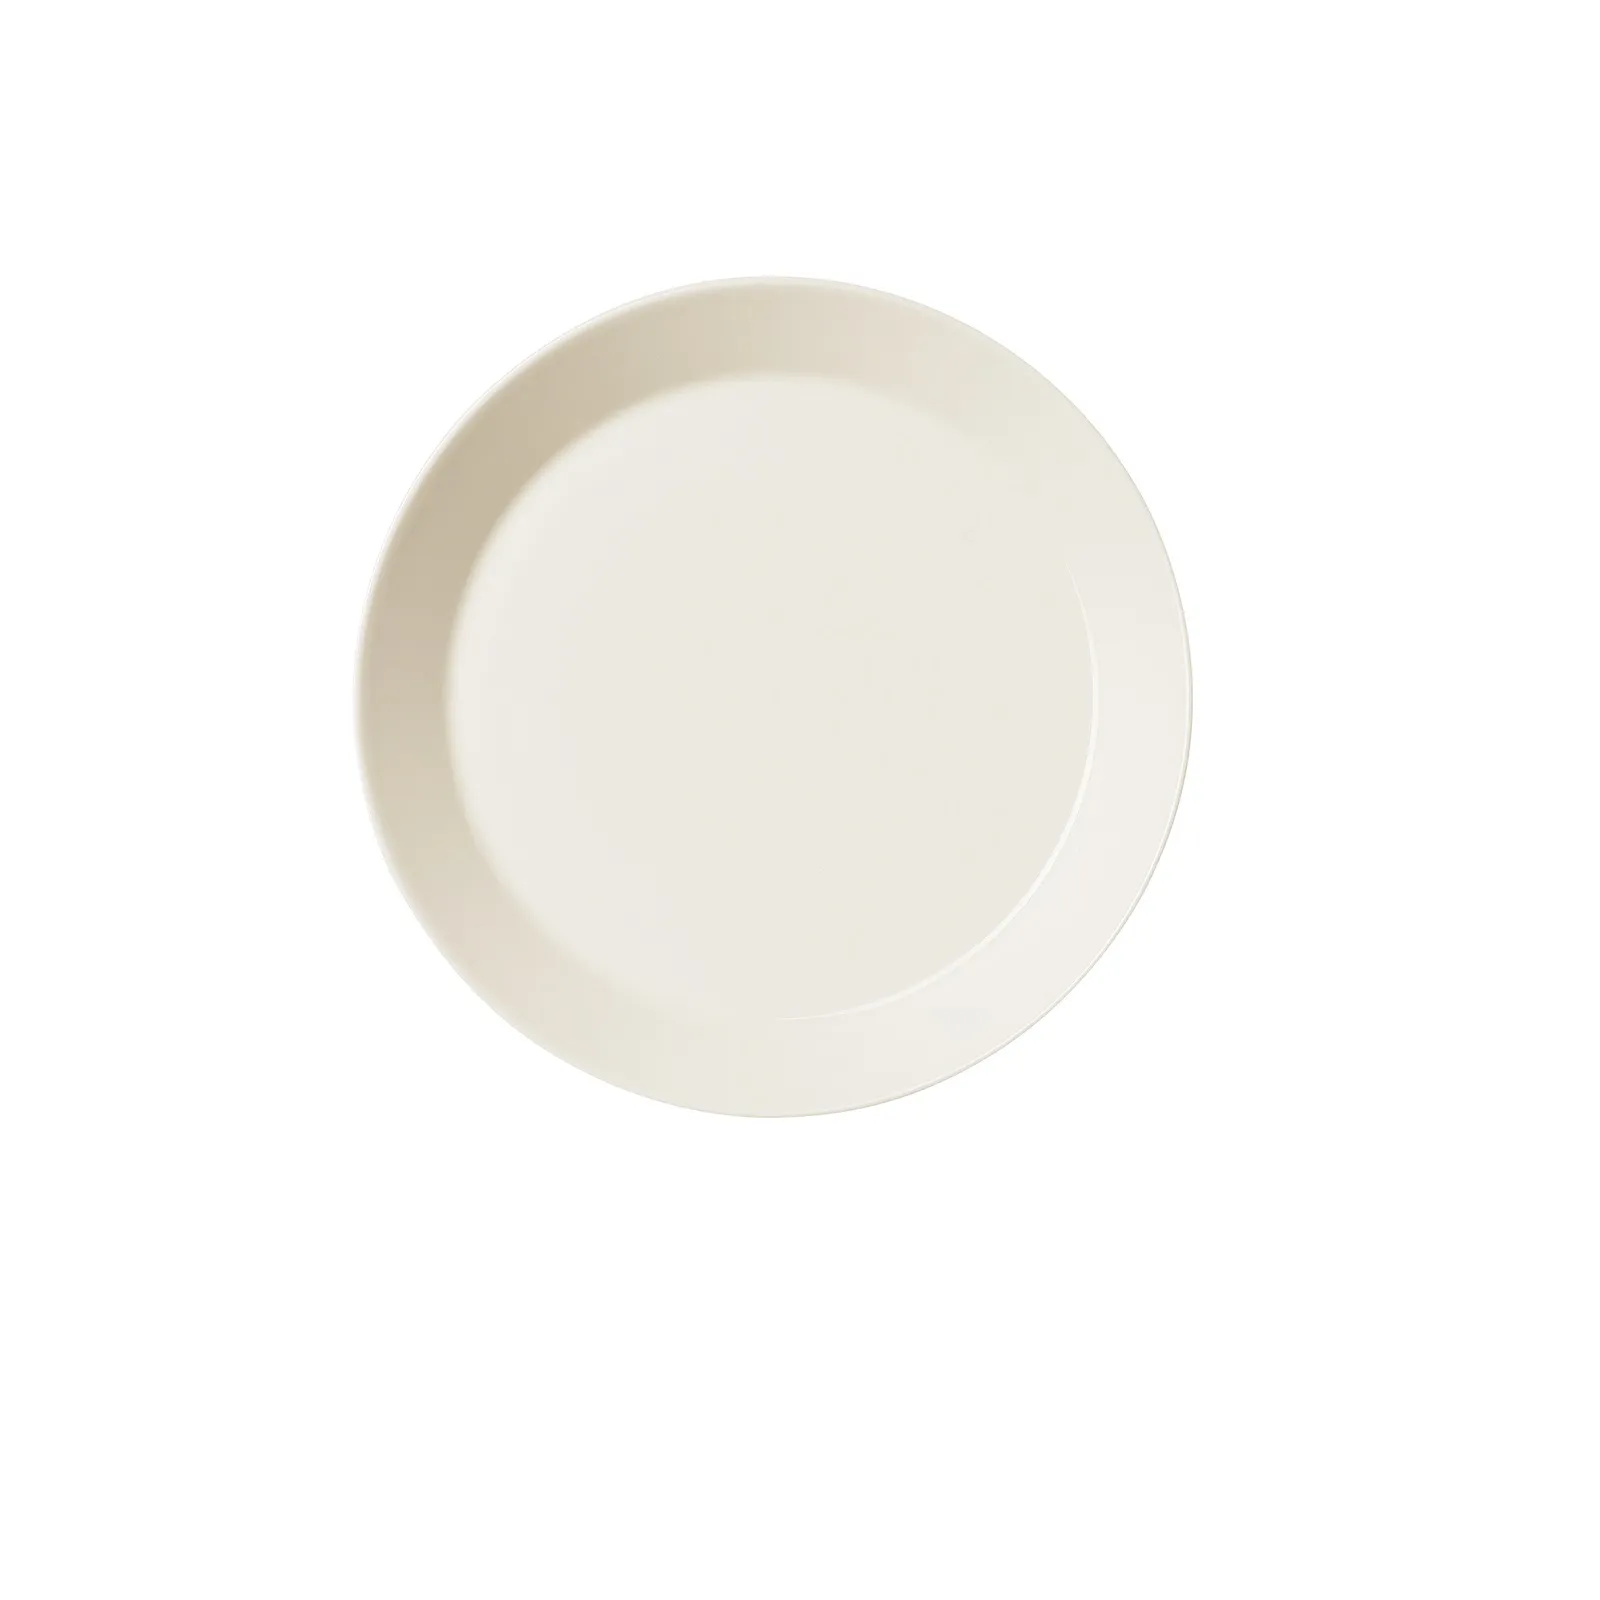 Iittala Teema plate 26cm white